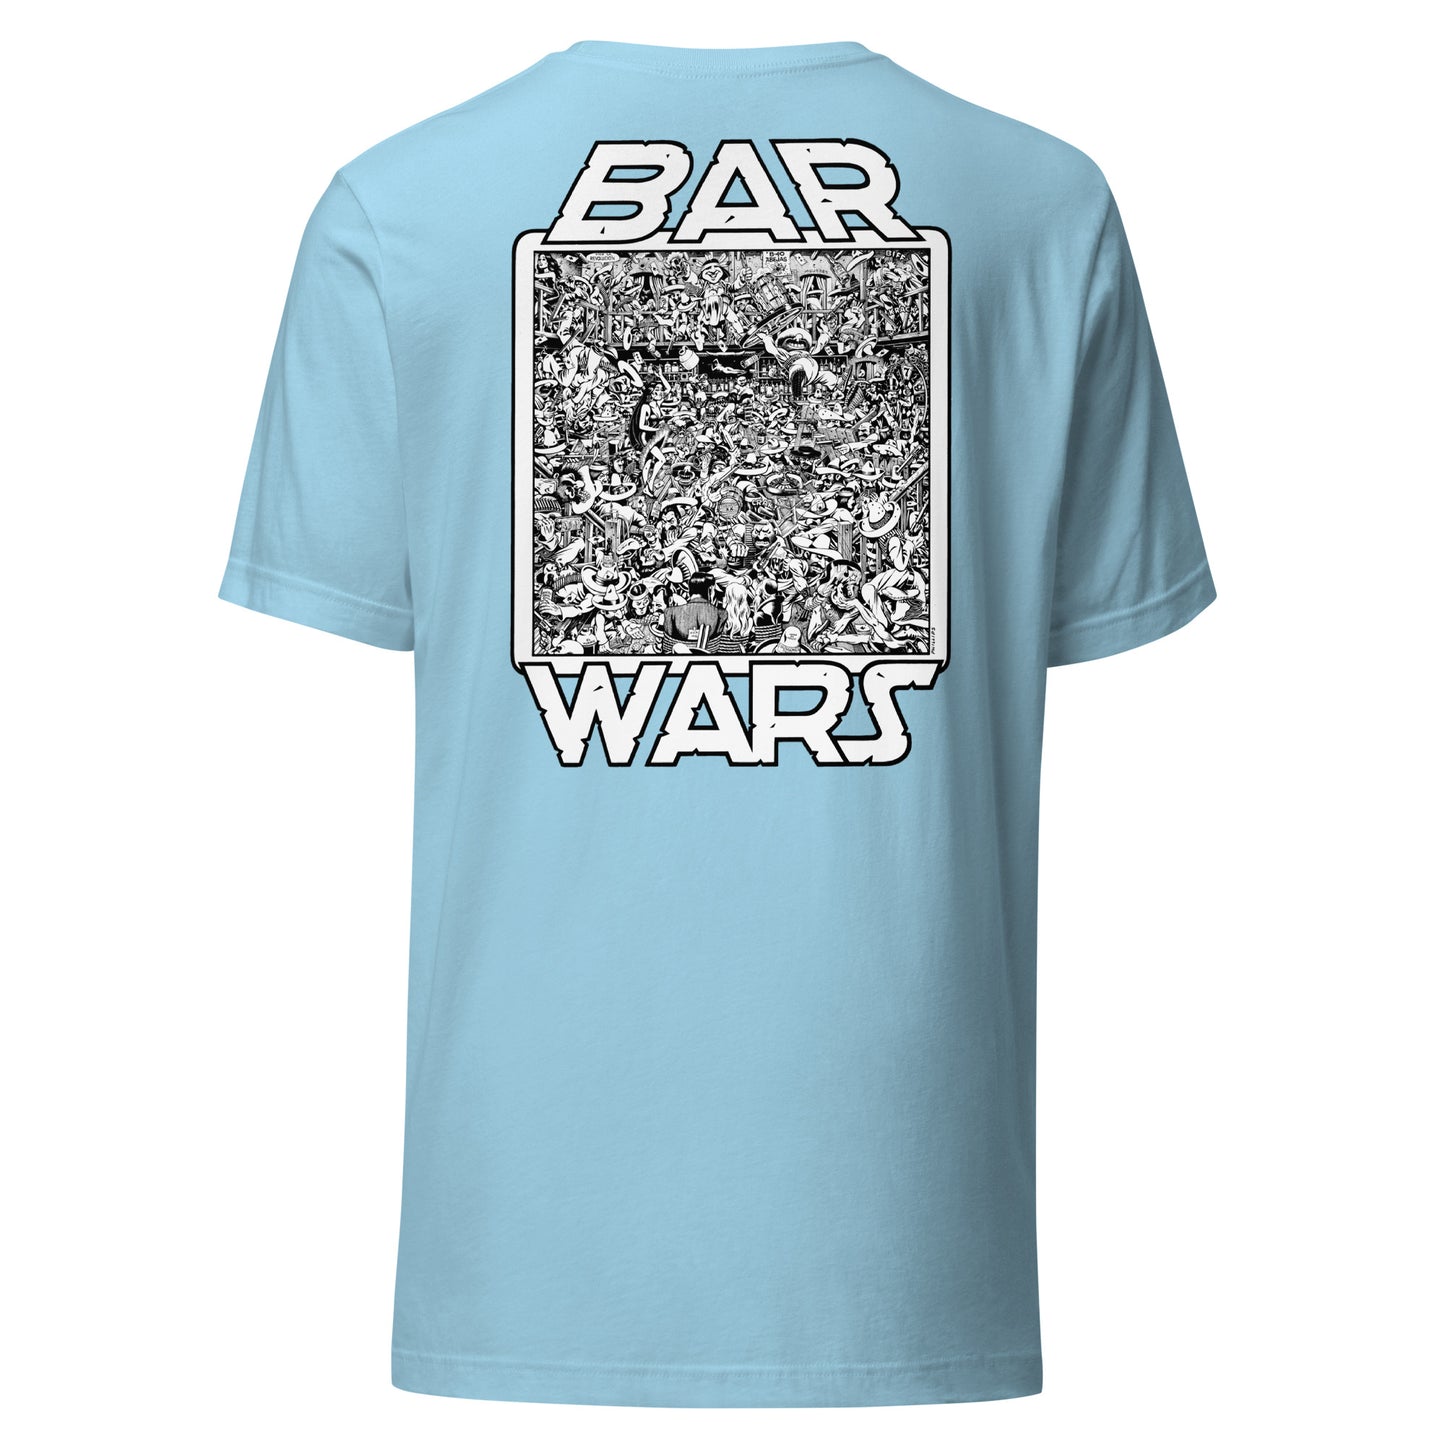 Pack Your Trash - BAR WARS - Unisex t-shirt